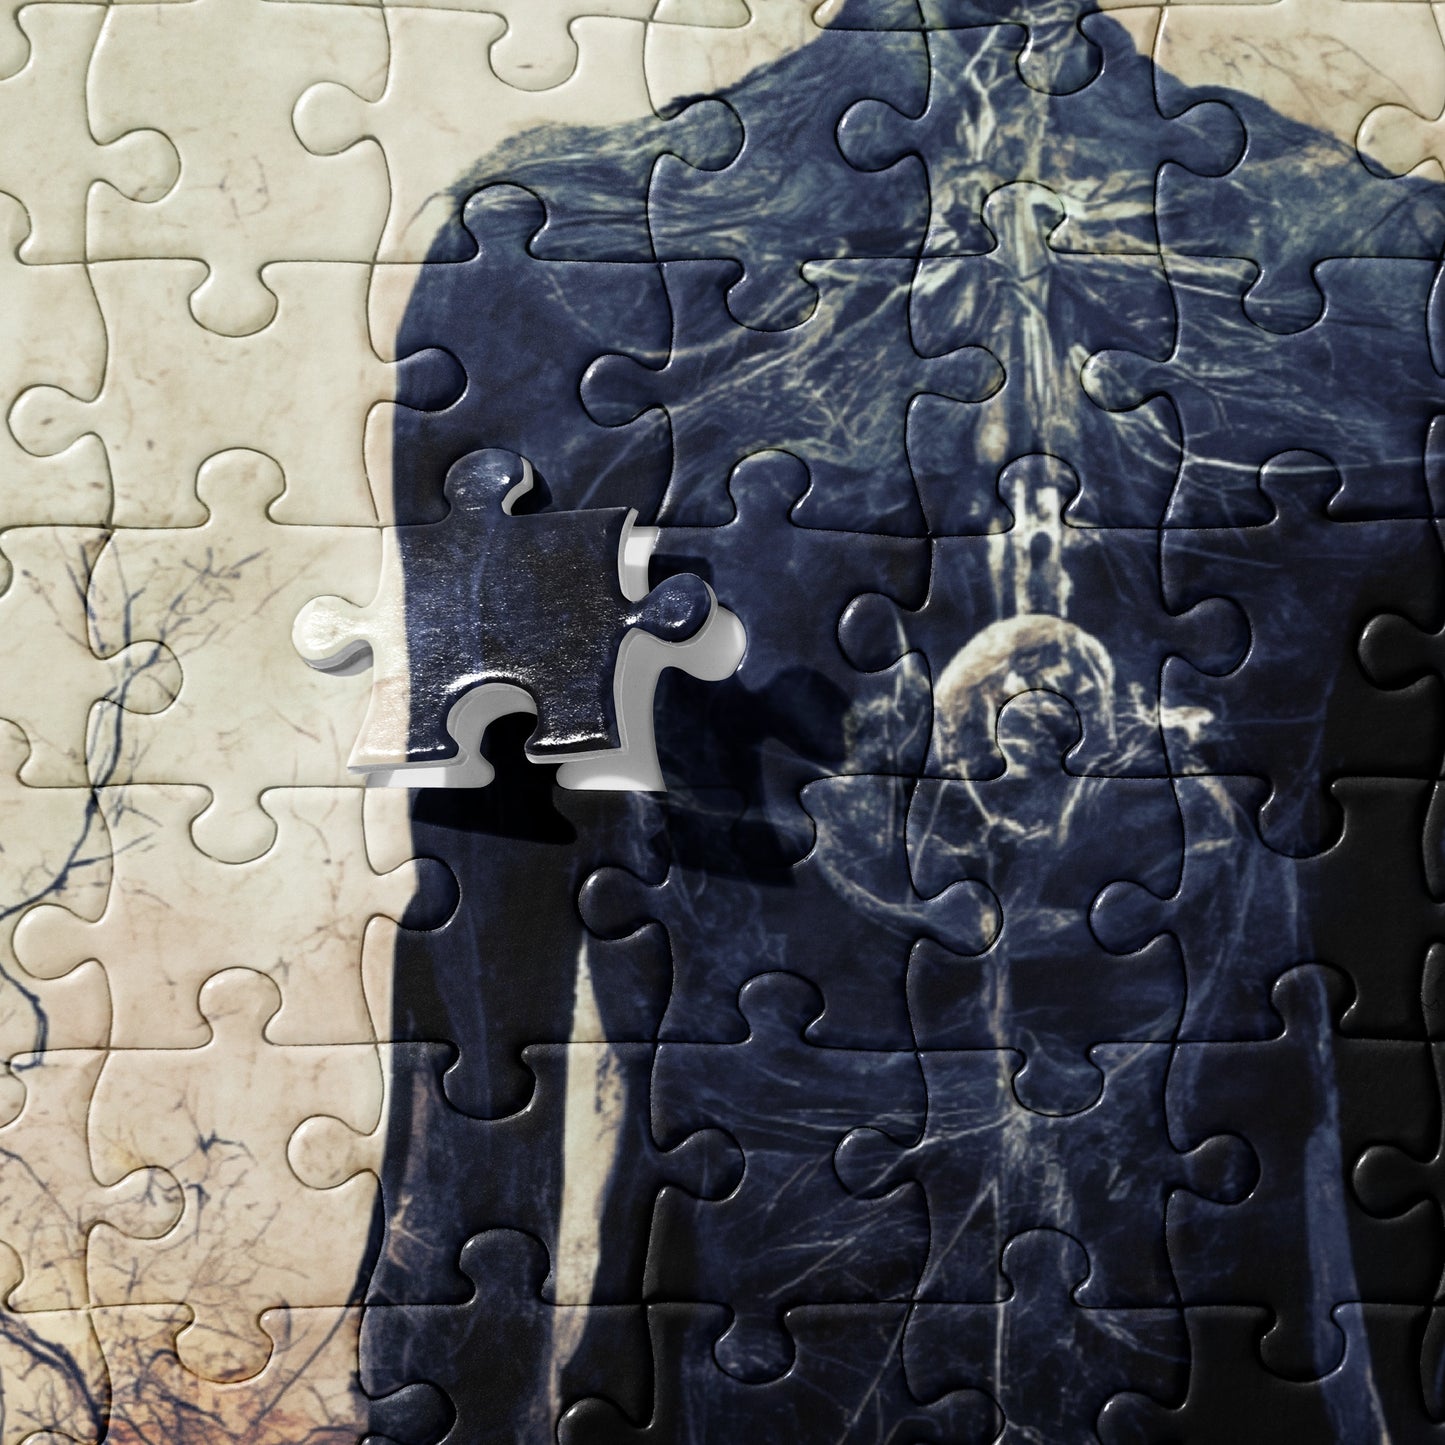 3/12 My Mind, Rewind Jigsaw puzzle